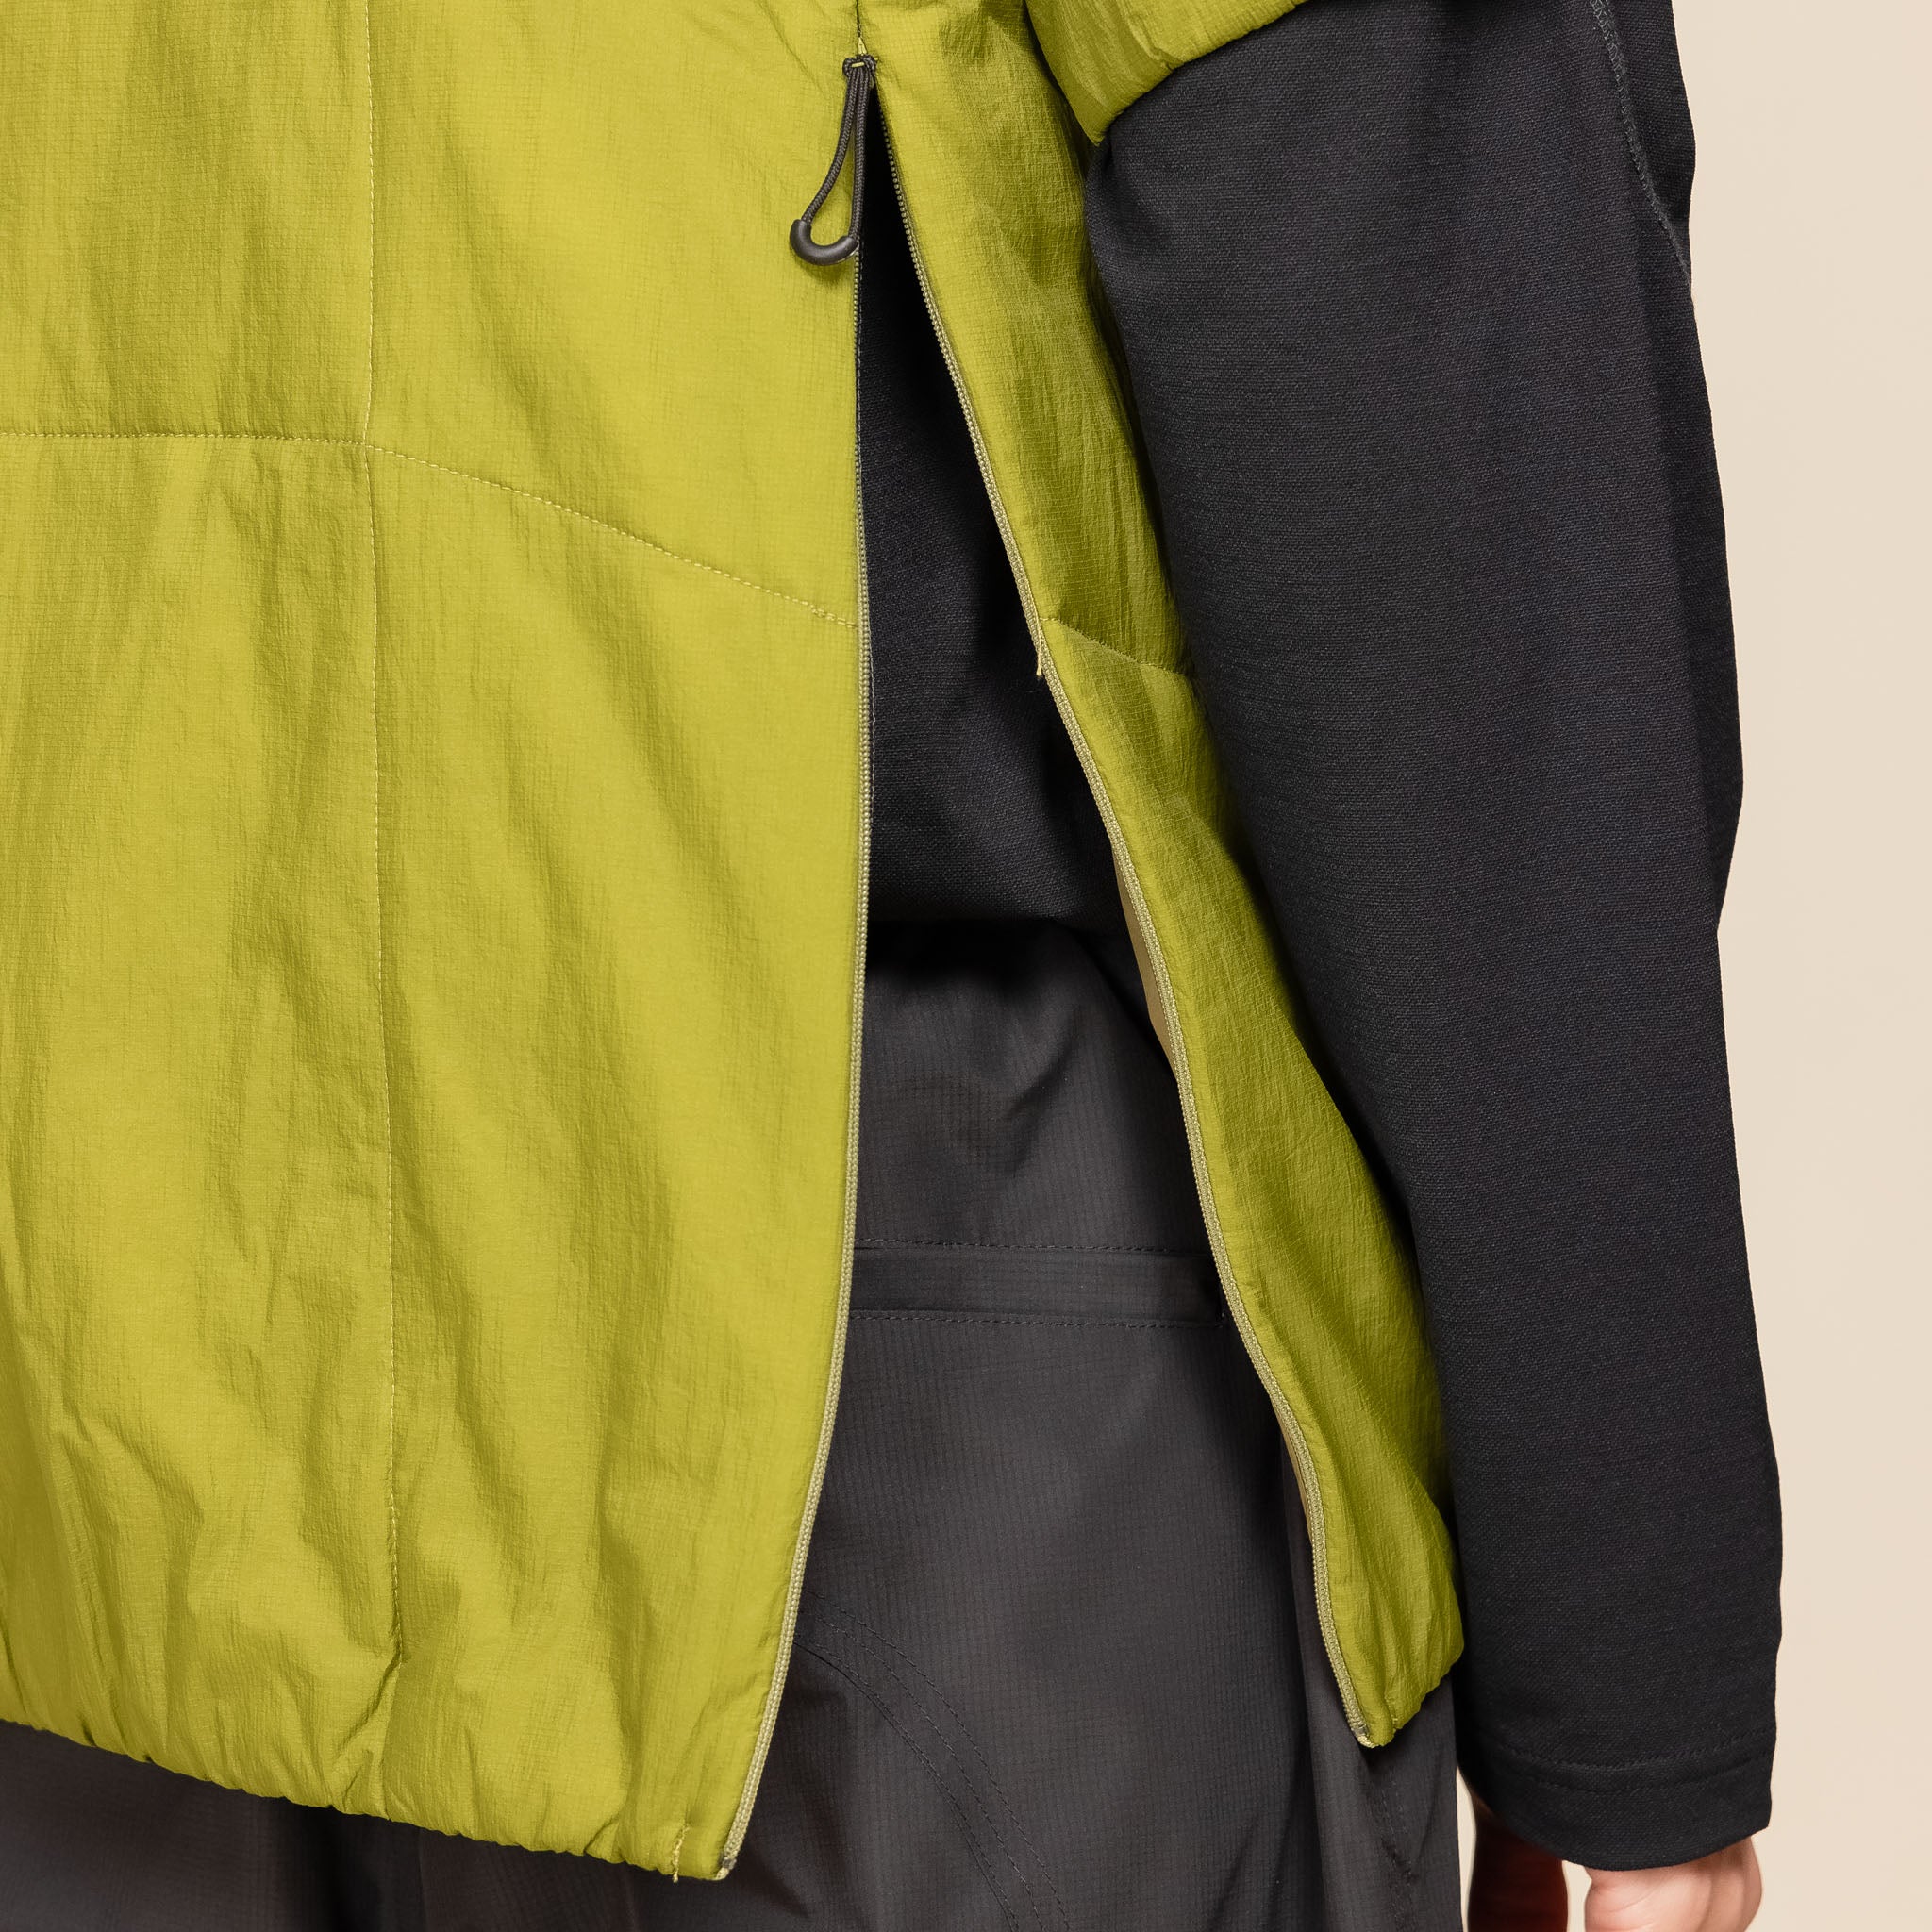 HNDN-027 Norbit by Hiroshi Nozawa - Insulation Inner Bush Short Sleeve T-Shirt Jacket - Green